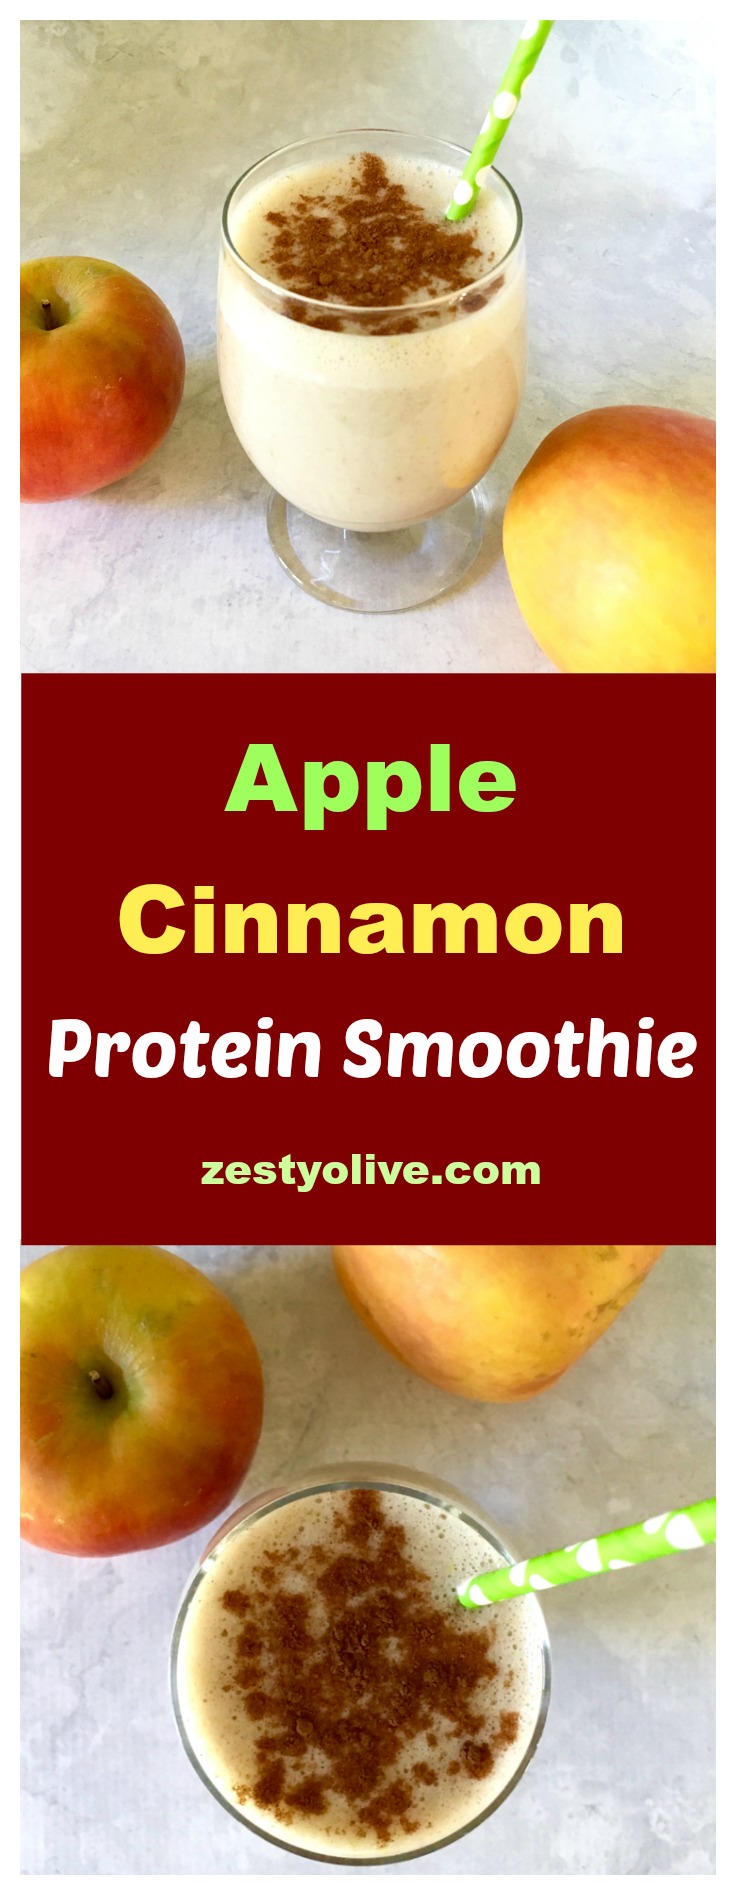 Apple Cinnamon Protein Smoothie